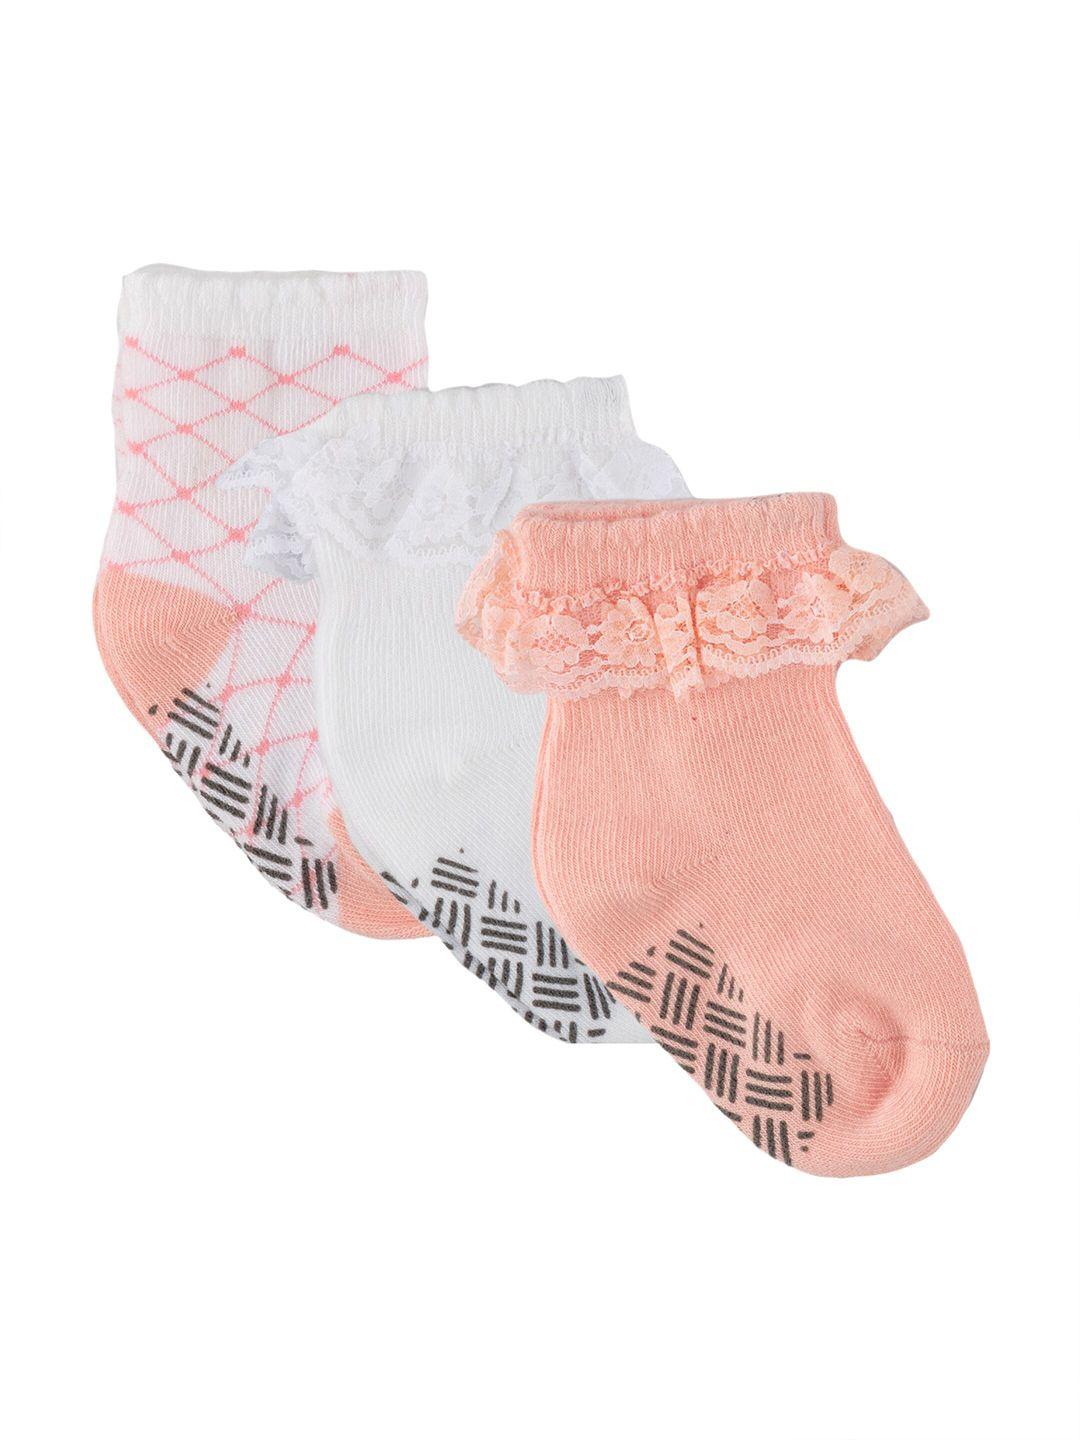 nuluv-girls-pack-of-3-assorted-ankle-length-socks